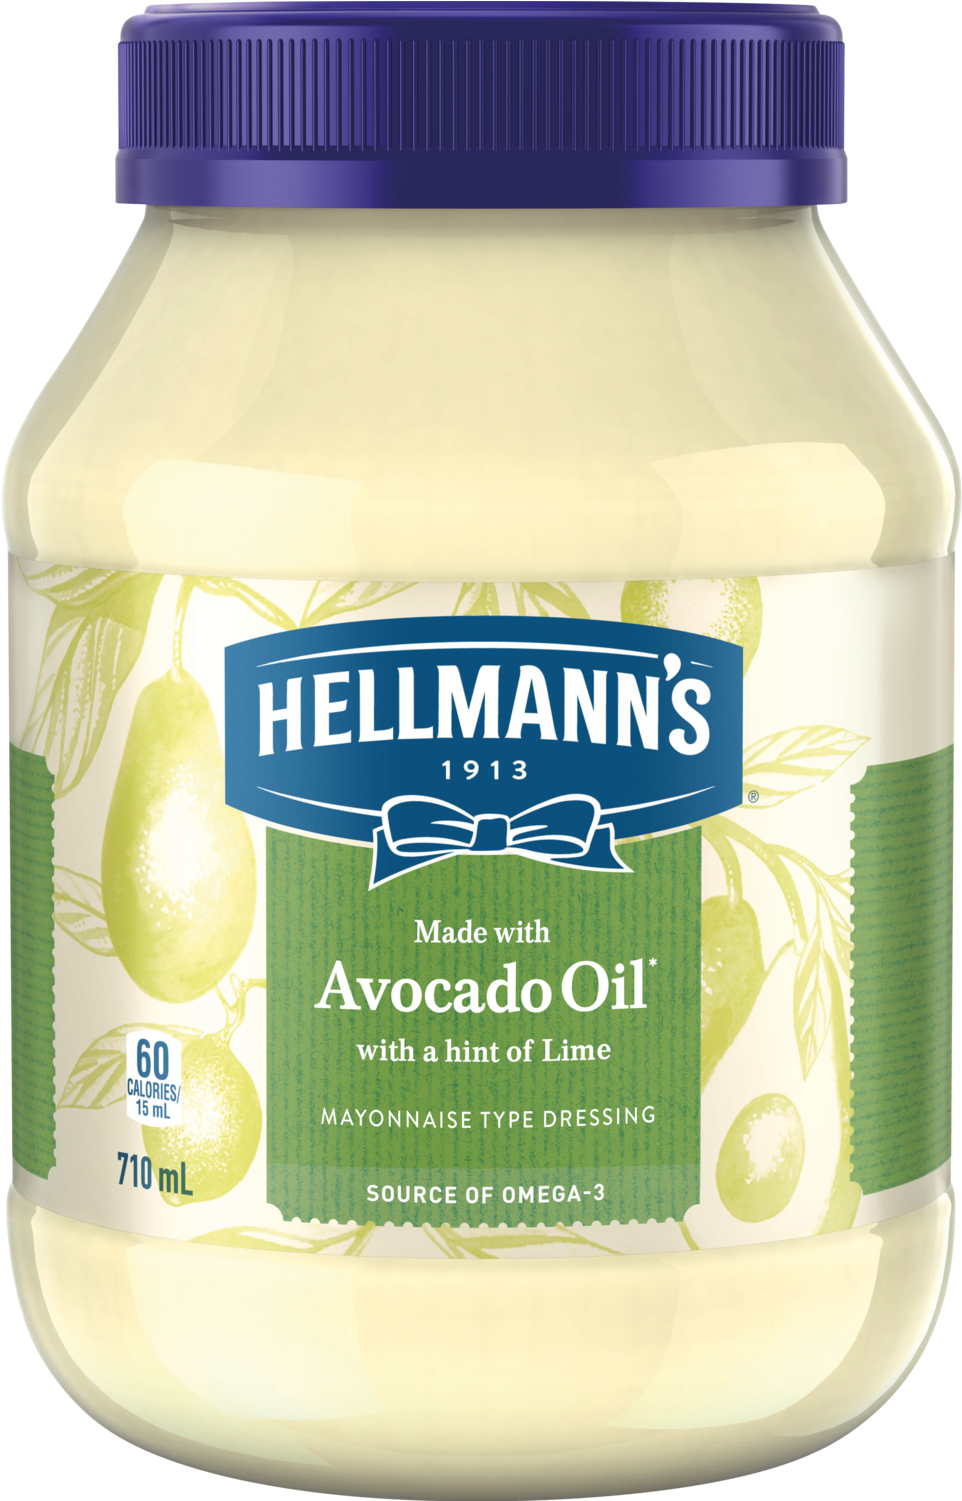 Hellmanns Avocado Oil Mayonnaise Jar PNG image